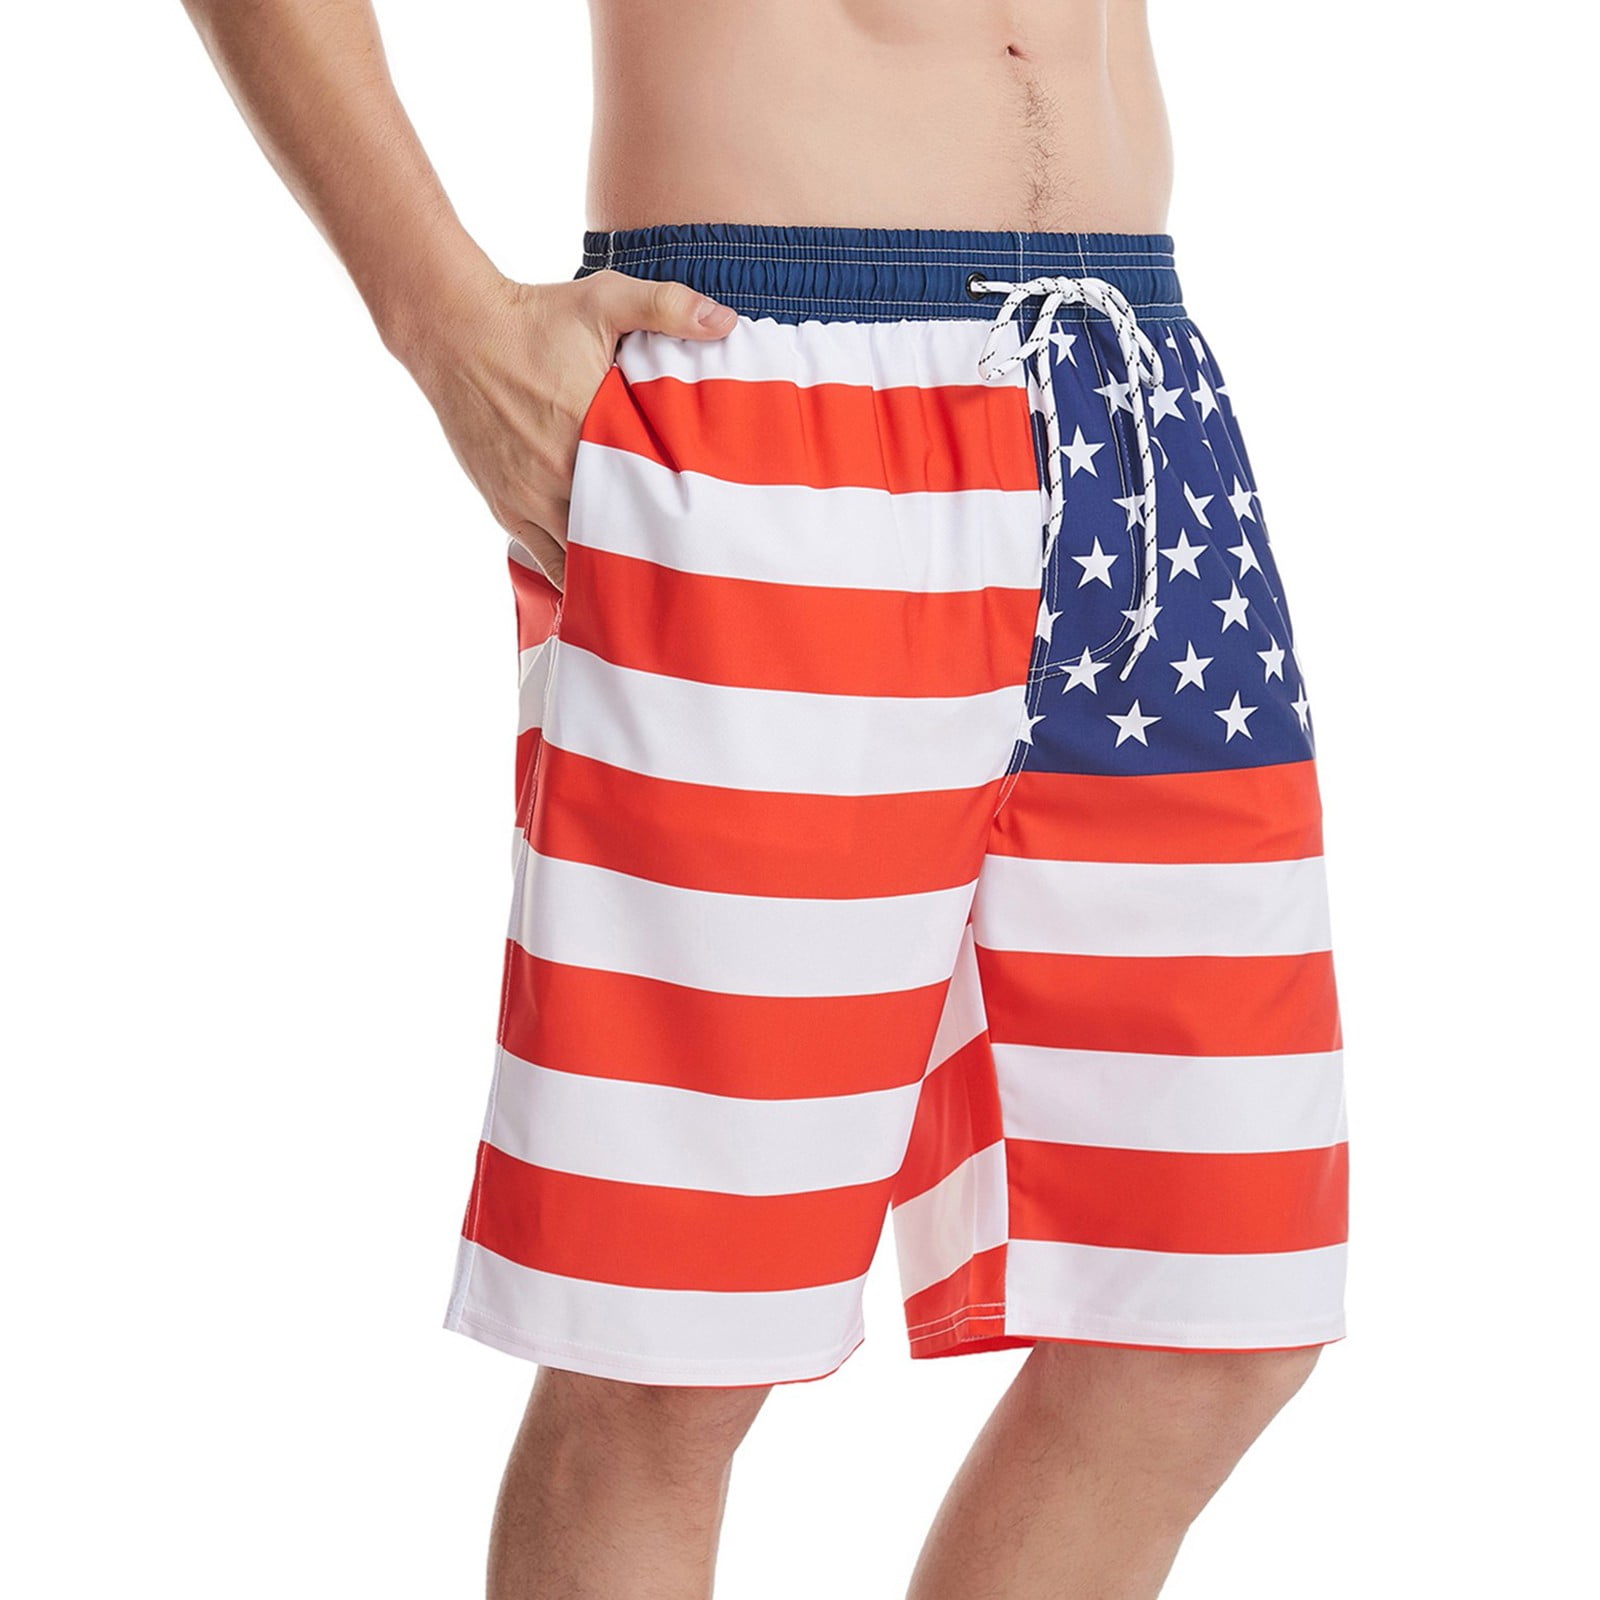 STLYESHORTS Ripped USA American Flag for Men Board Shorts Swim Trunks Beachwear Athletic Gym Shorts